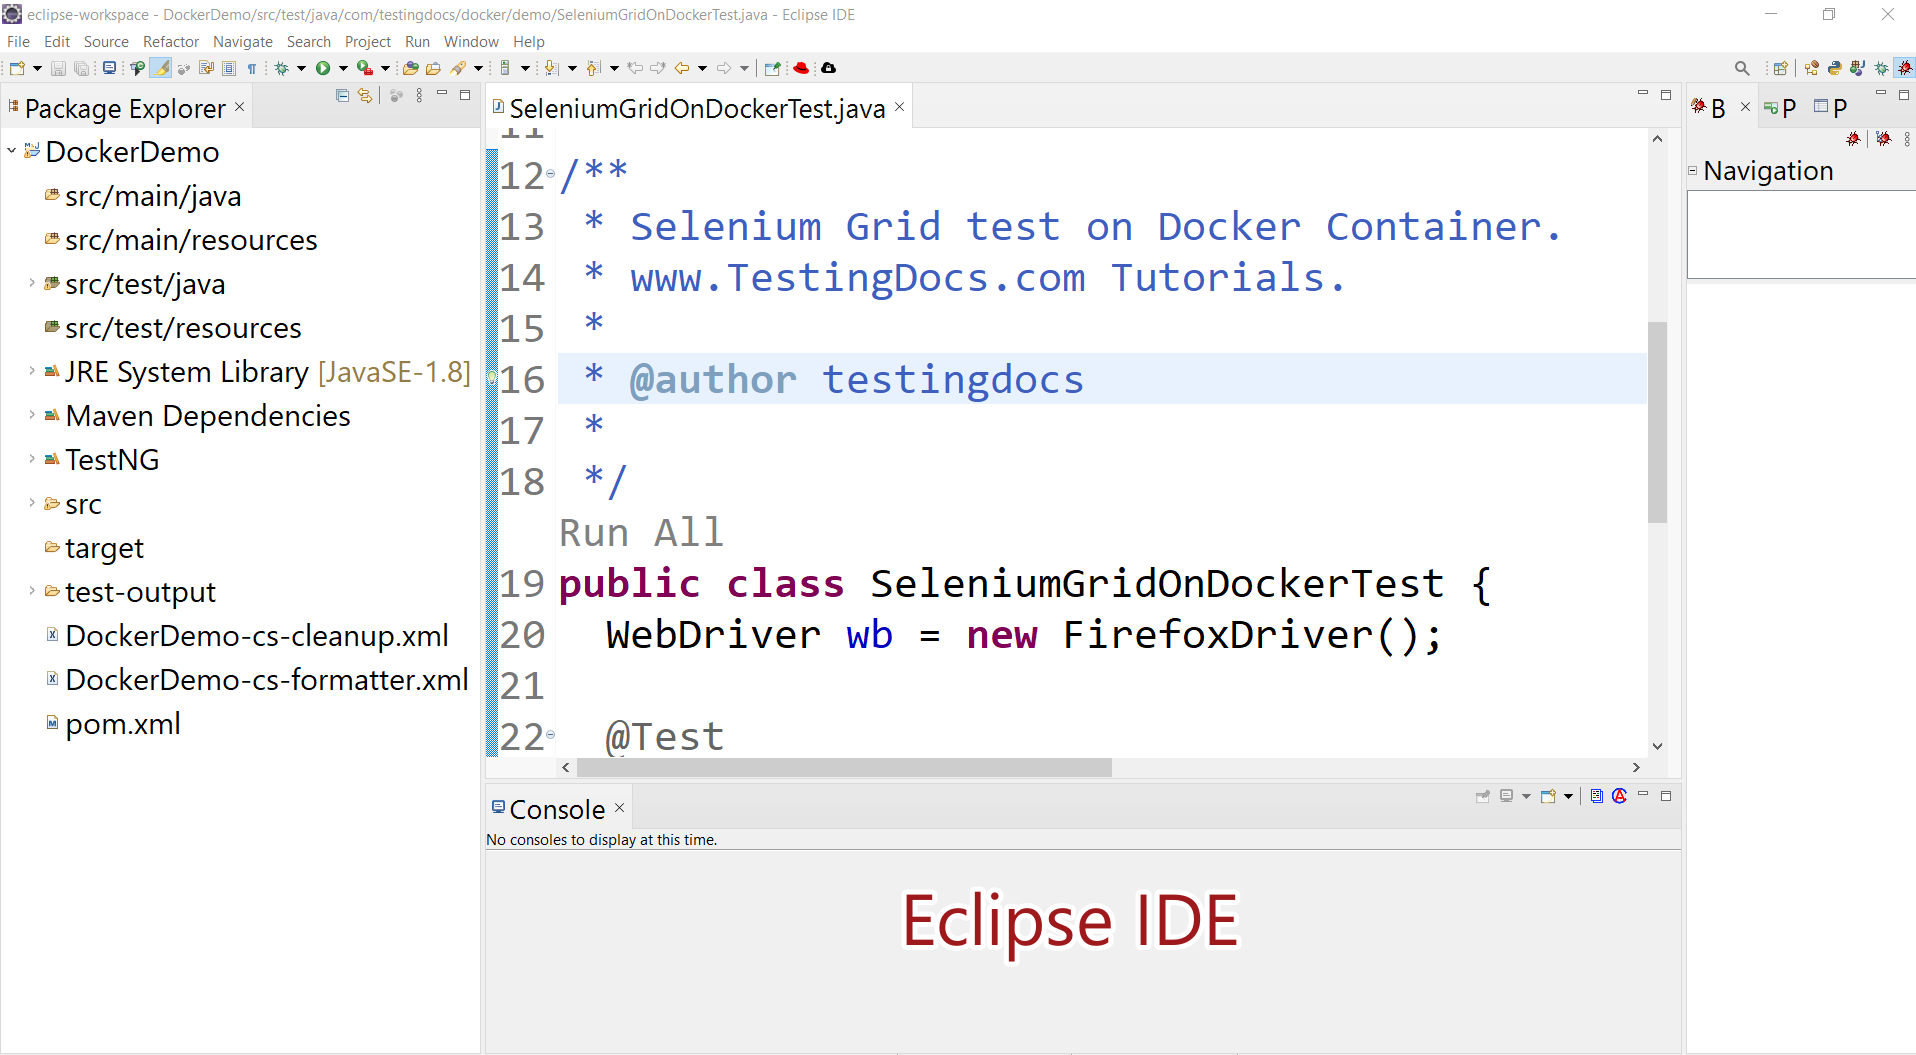 Eclipse IDE Window